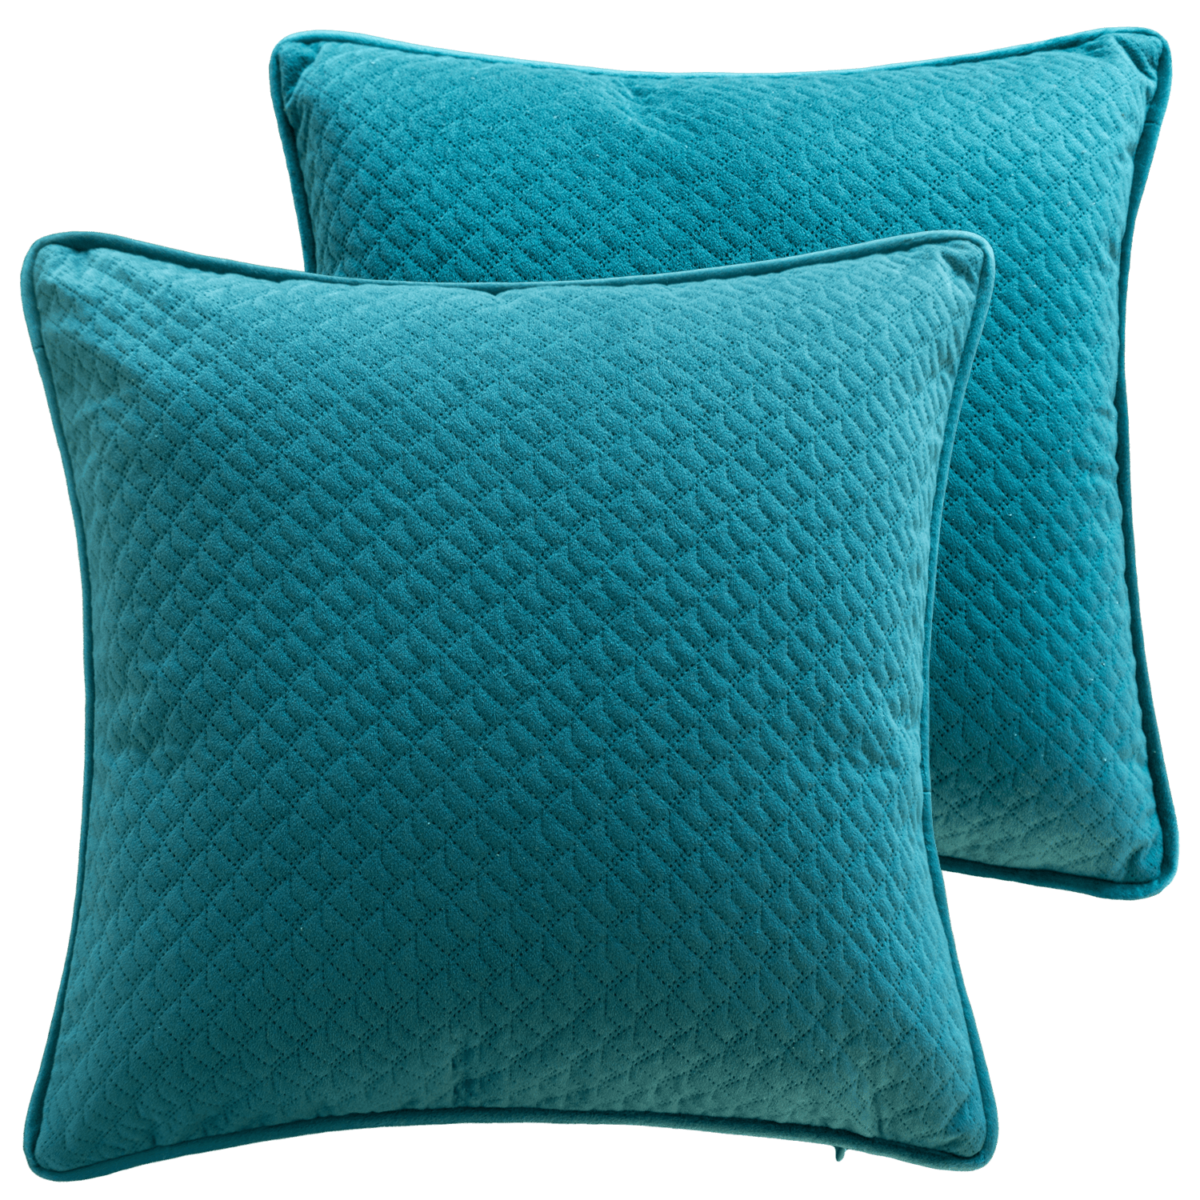 emerald plain decorative 16 X 16 pillow cover